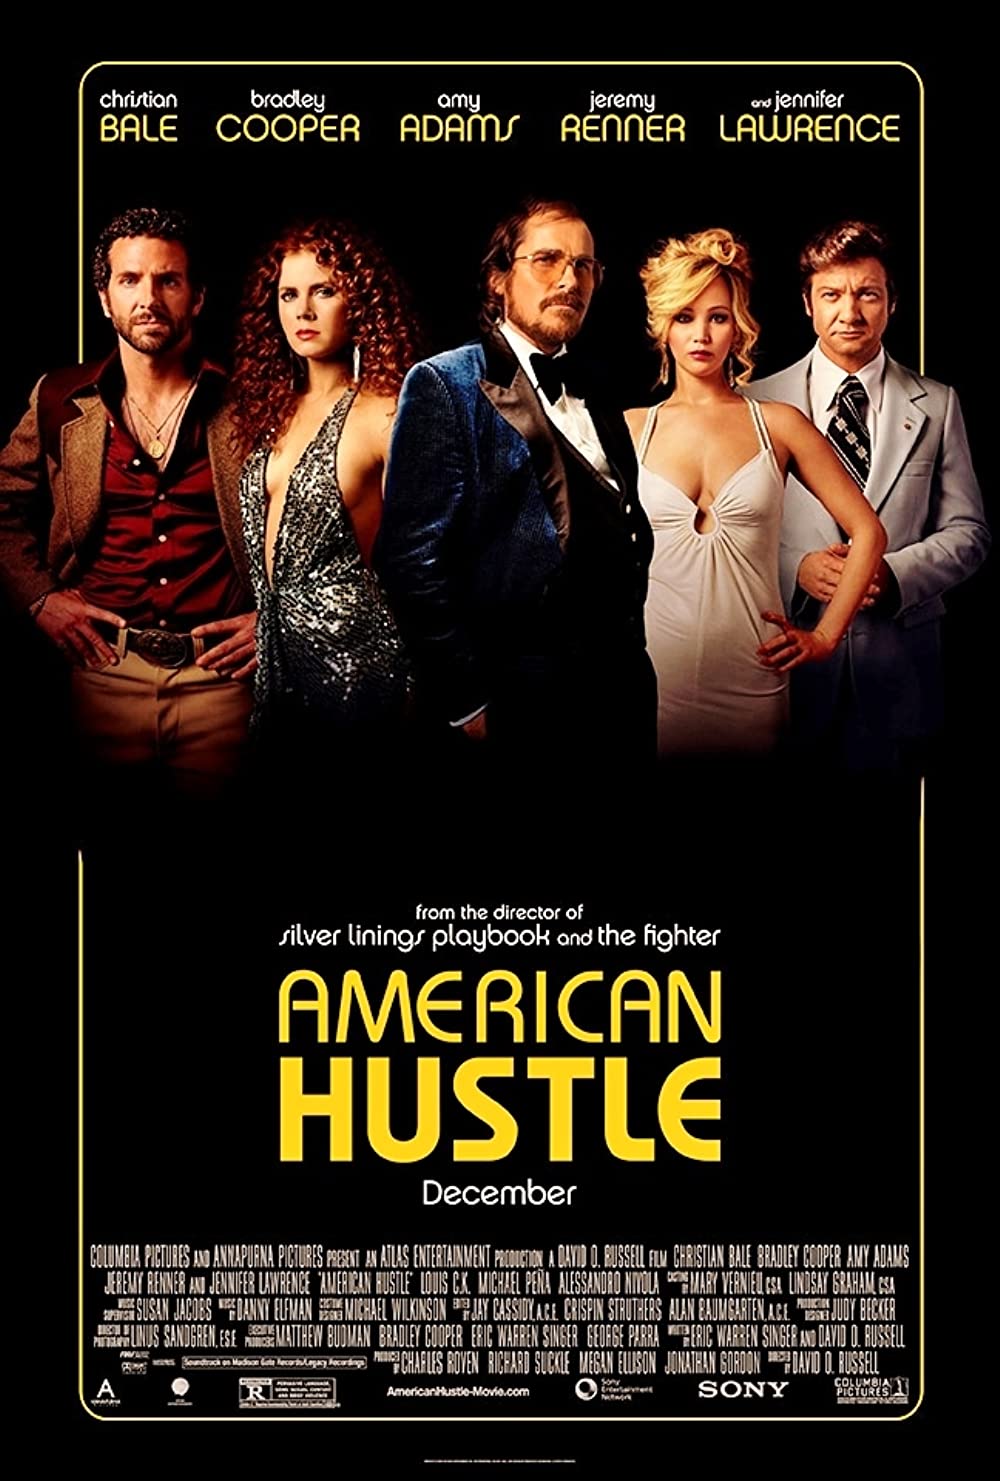 Filmbeschreibung zu American Hustle